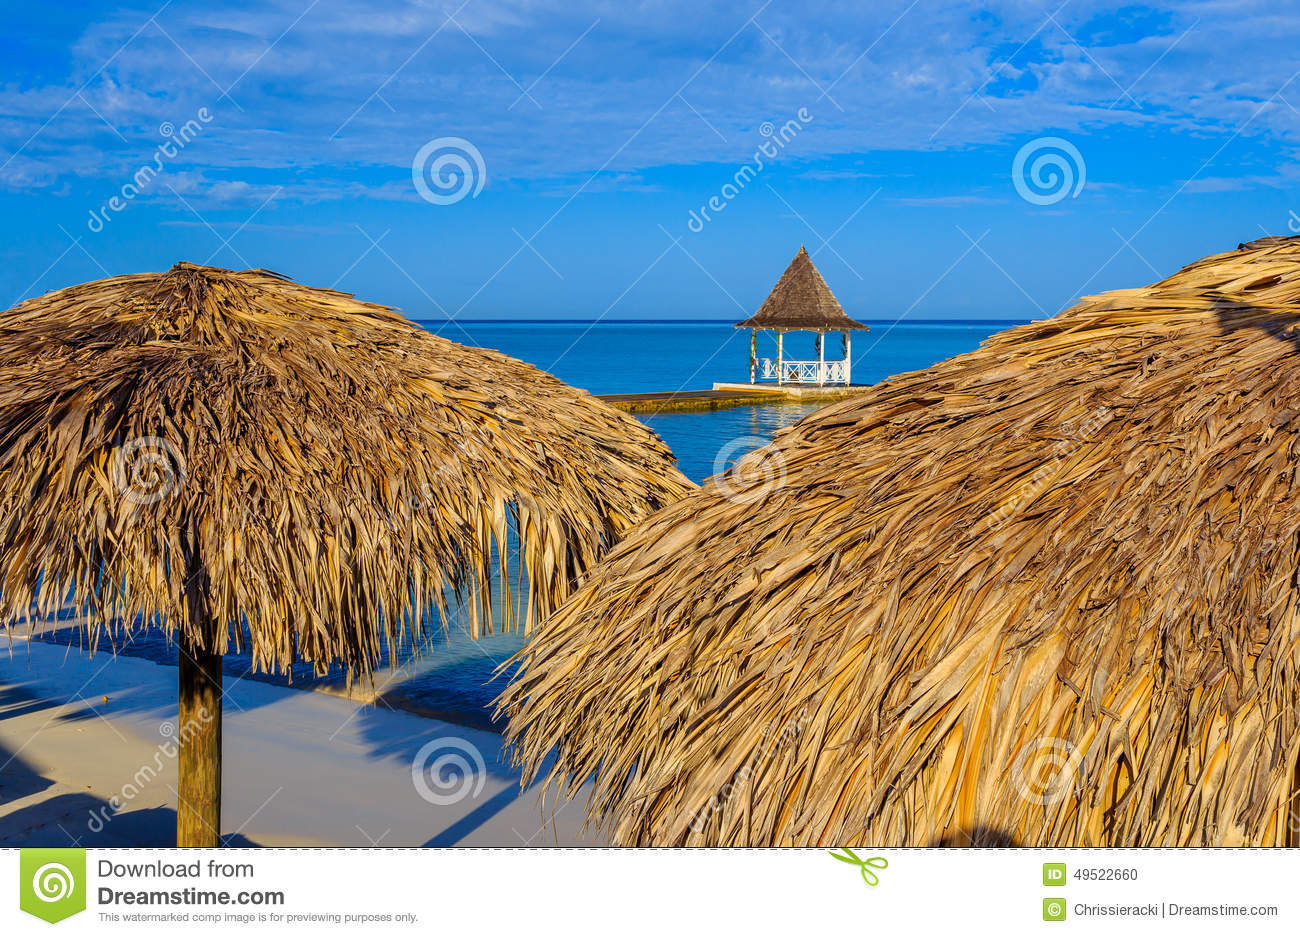 Thatch Umbrellas On Beach Montego Bay Jamaica Wedding Gazebo On Beach